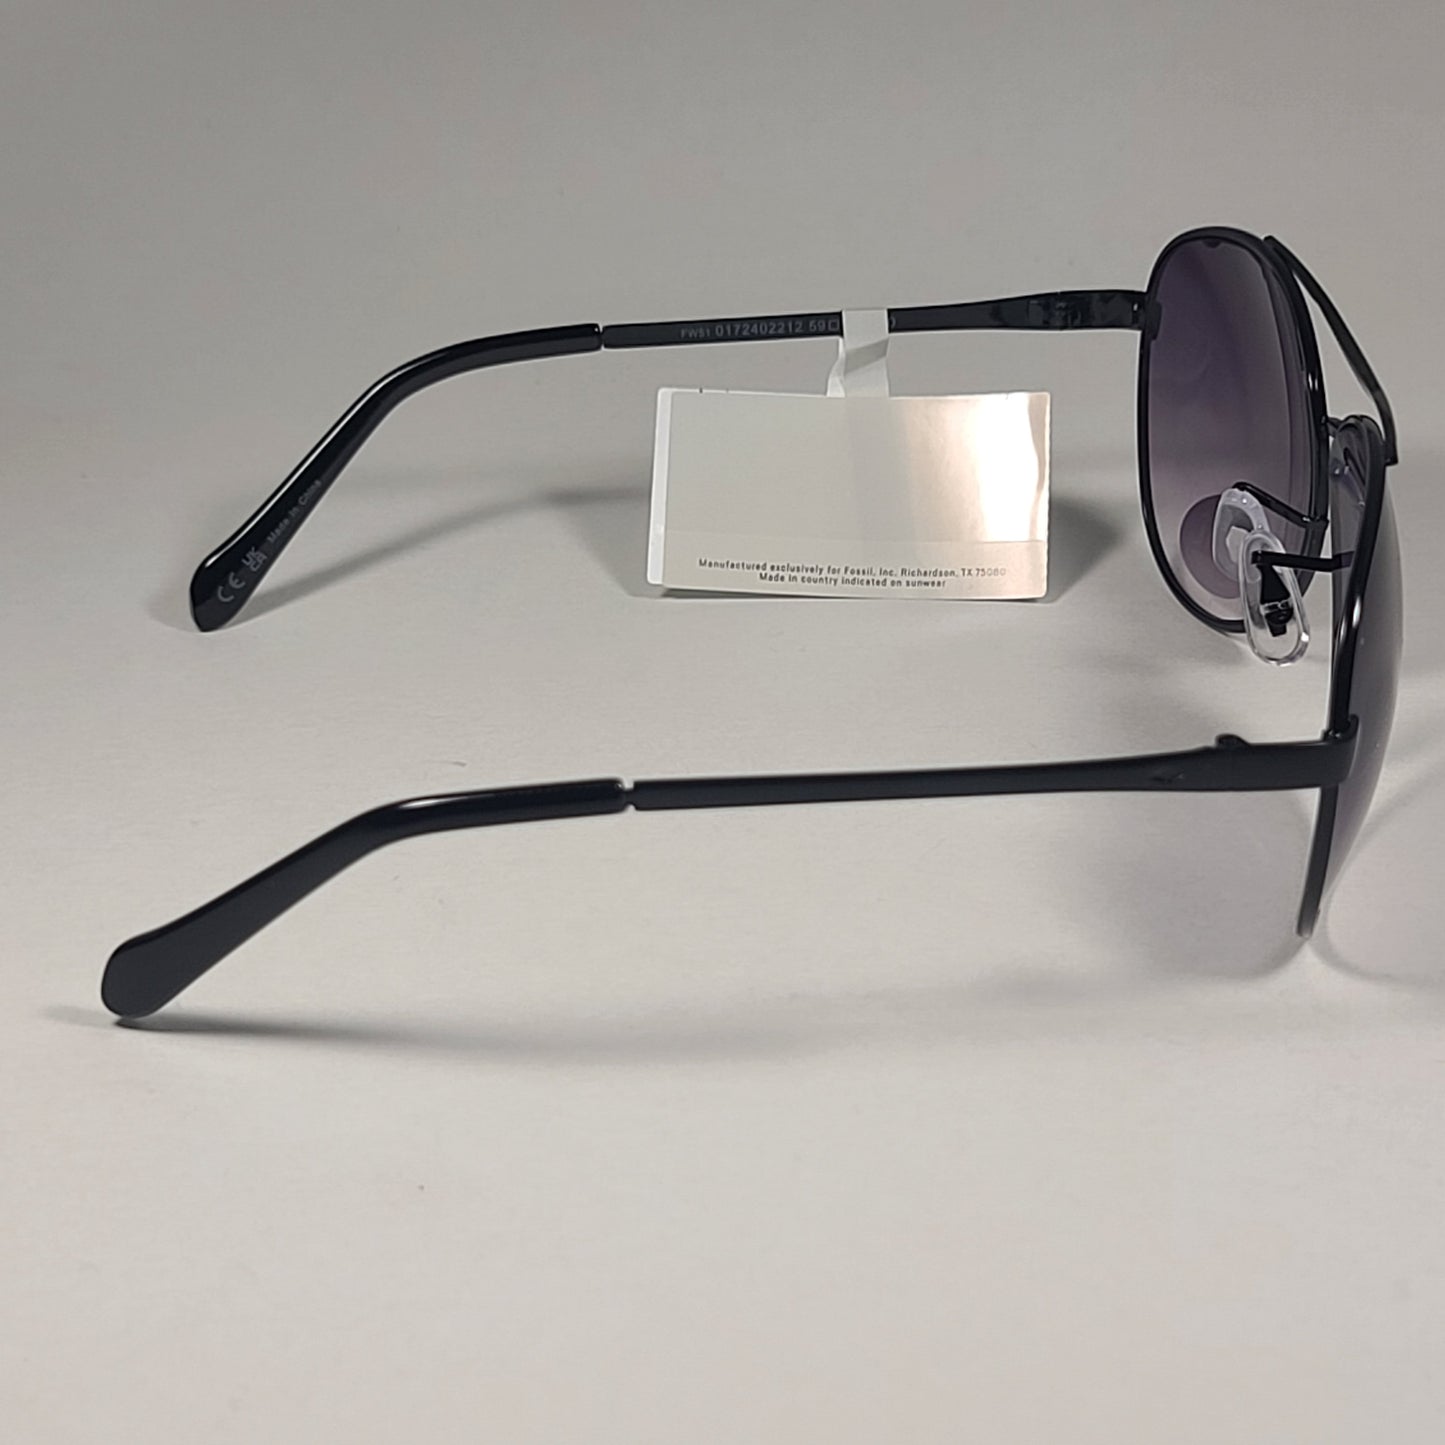 Fossil FW51 Pilot Sunglasses Black Frame & Smoke Gray Gradient Lens - Sunglasses